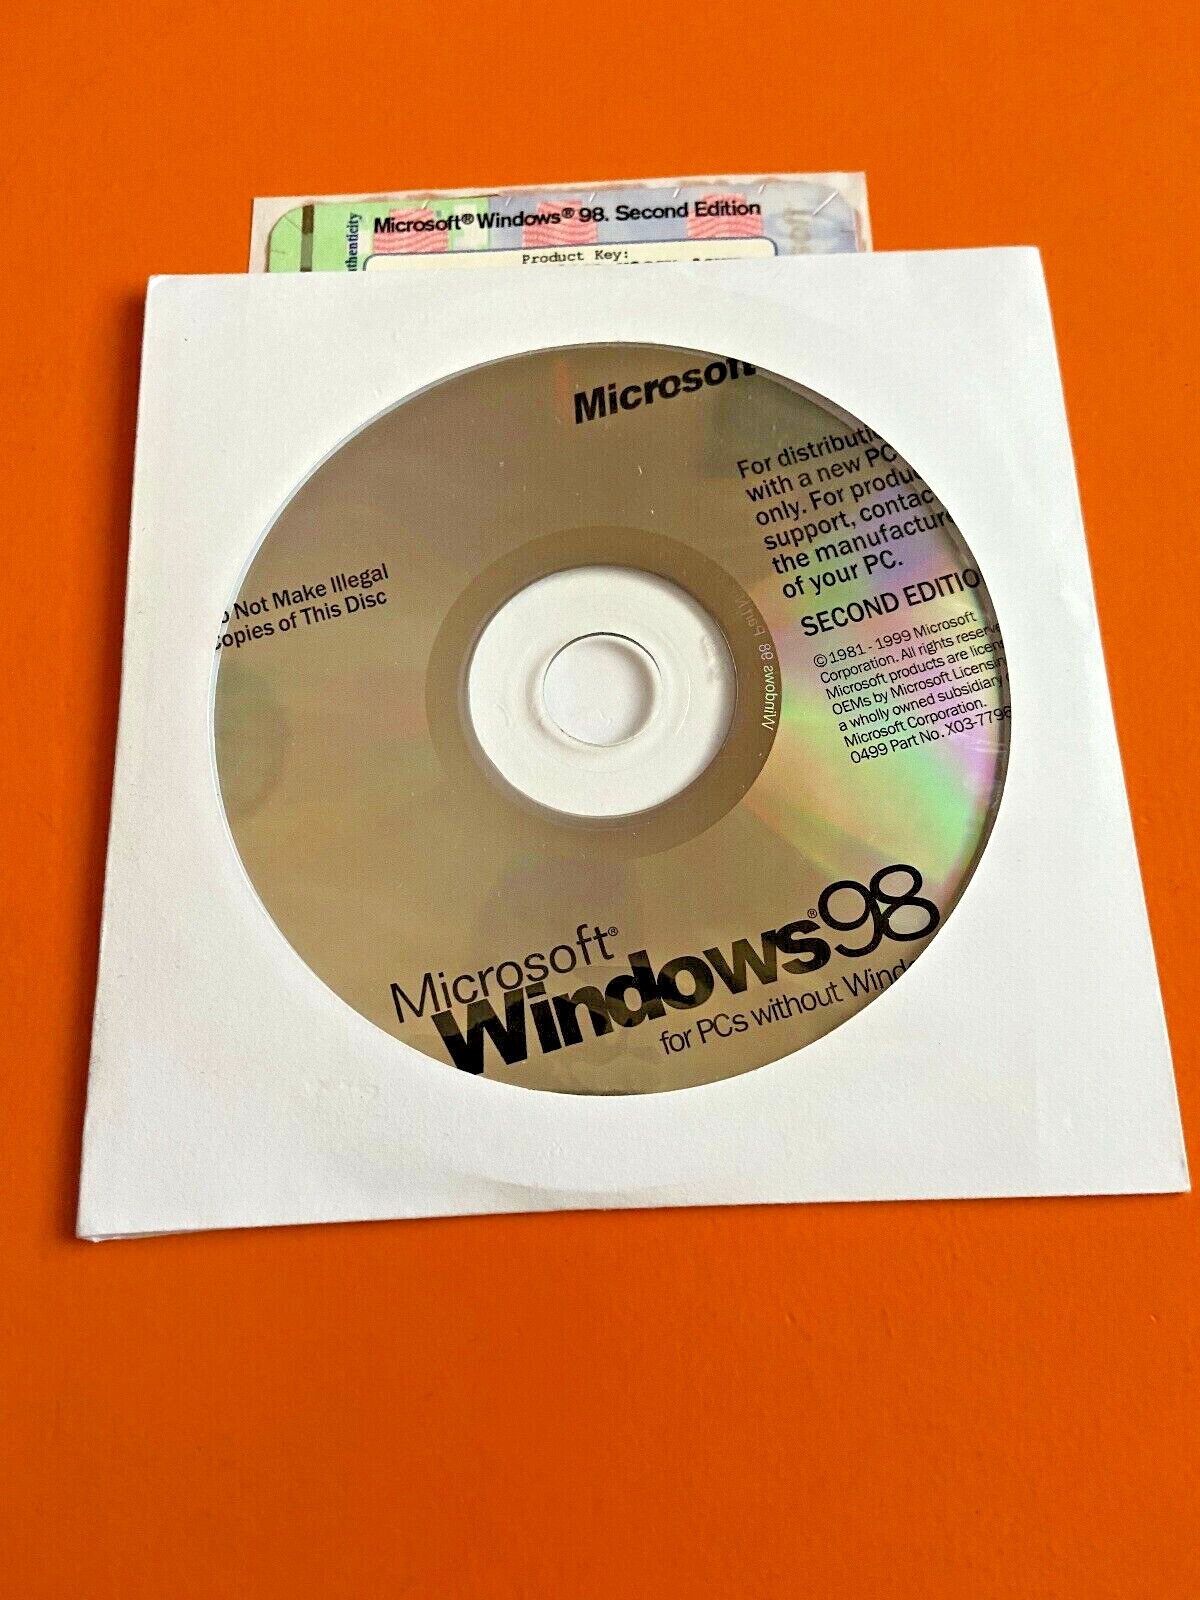 Microsoft Windows 98 Second Edition SE open box (NOT FOR VIRTUAL MACHINES)